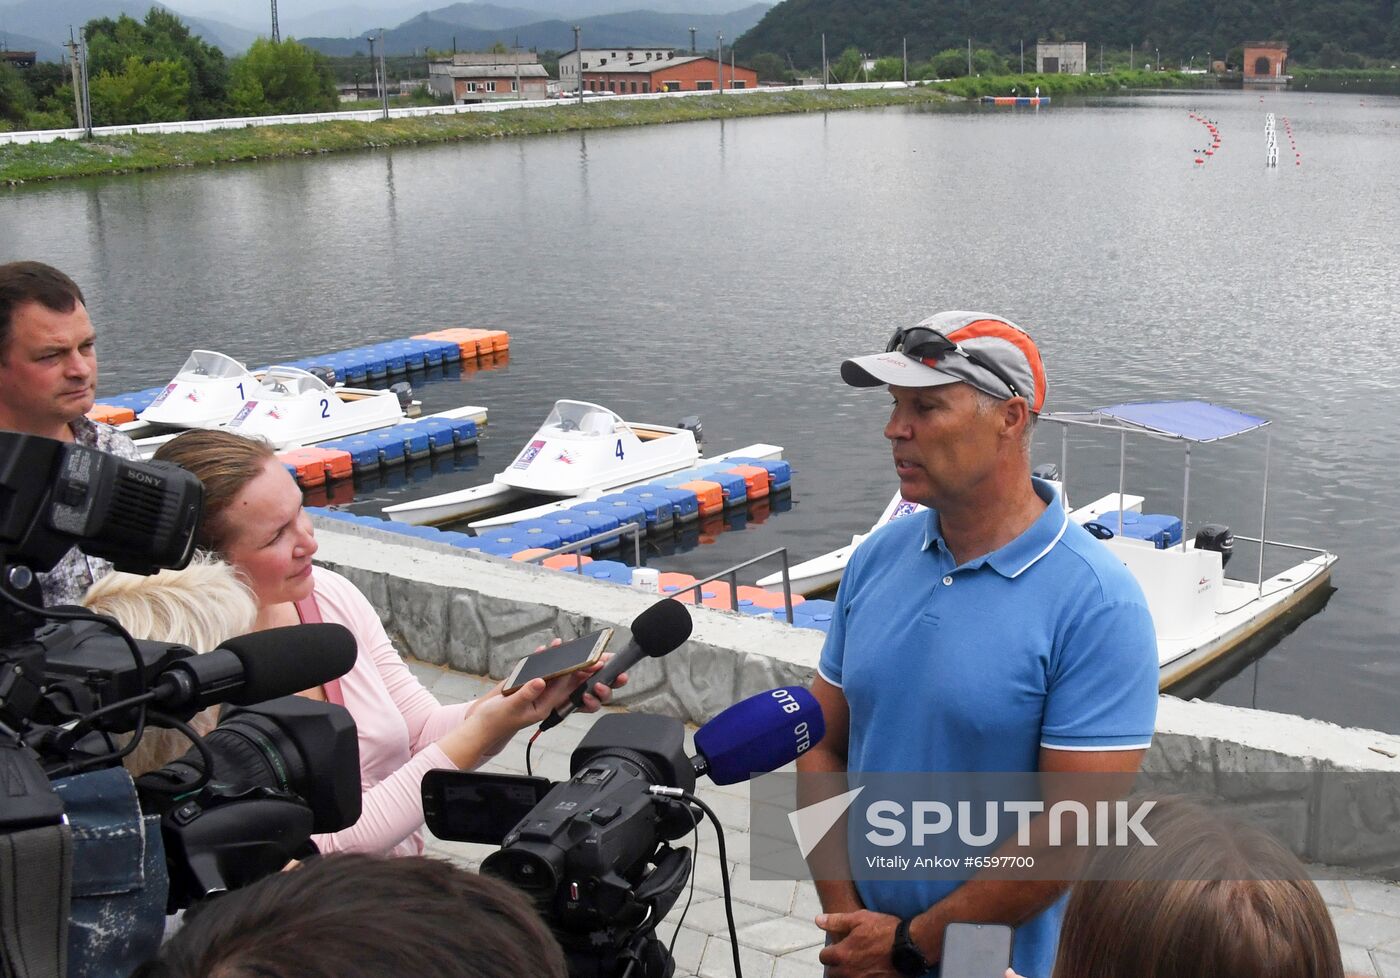 Russia Olympics 2020 Kayaking Preparations